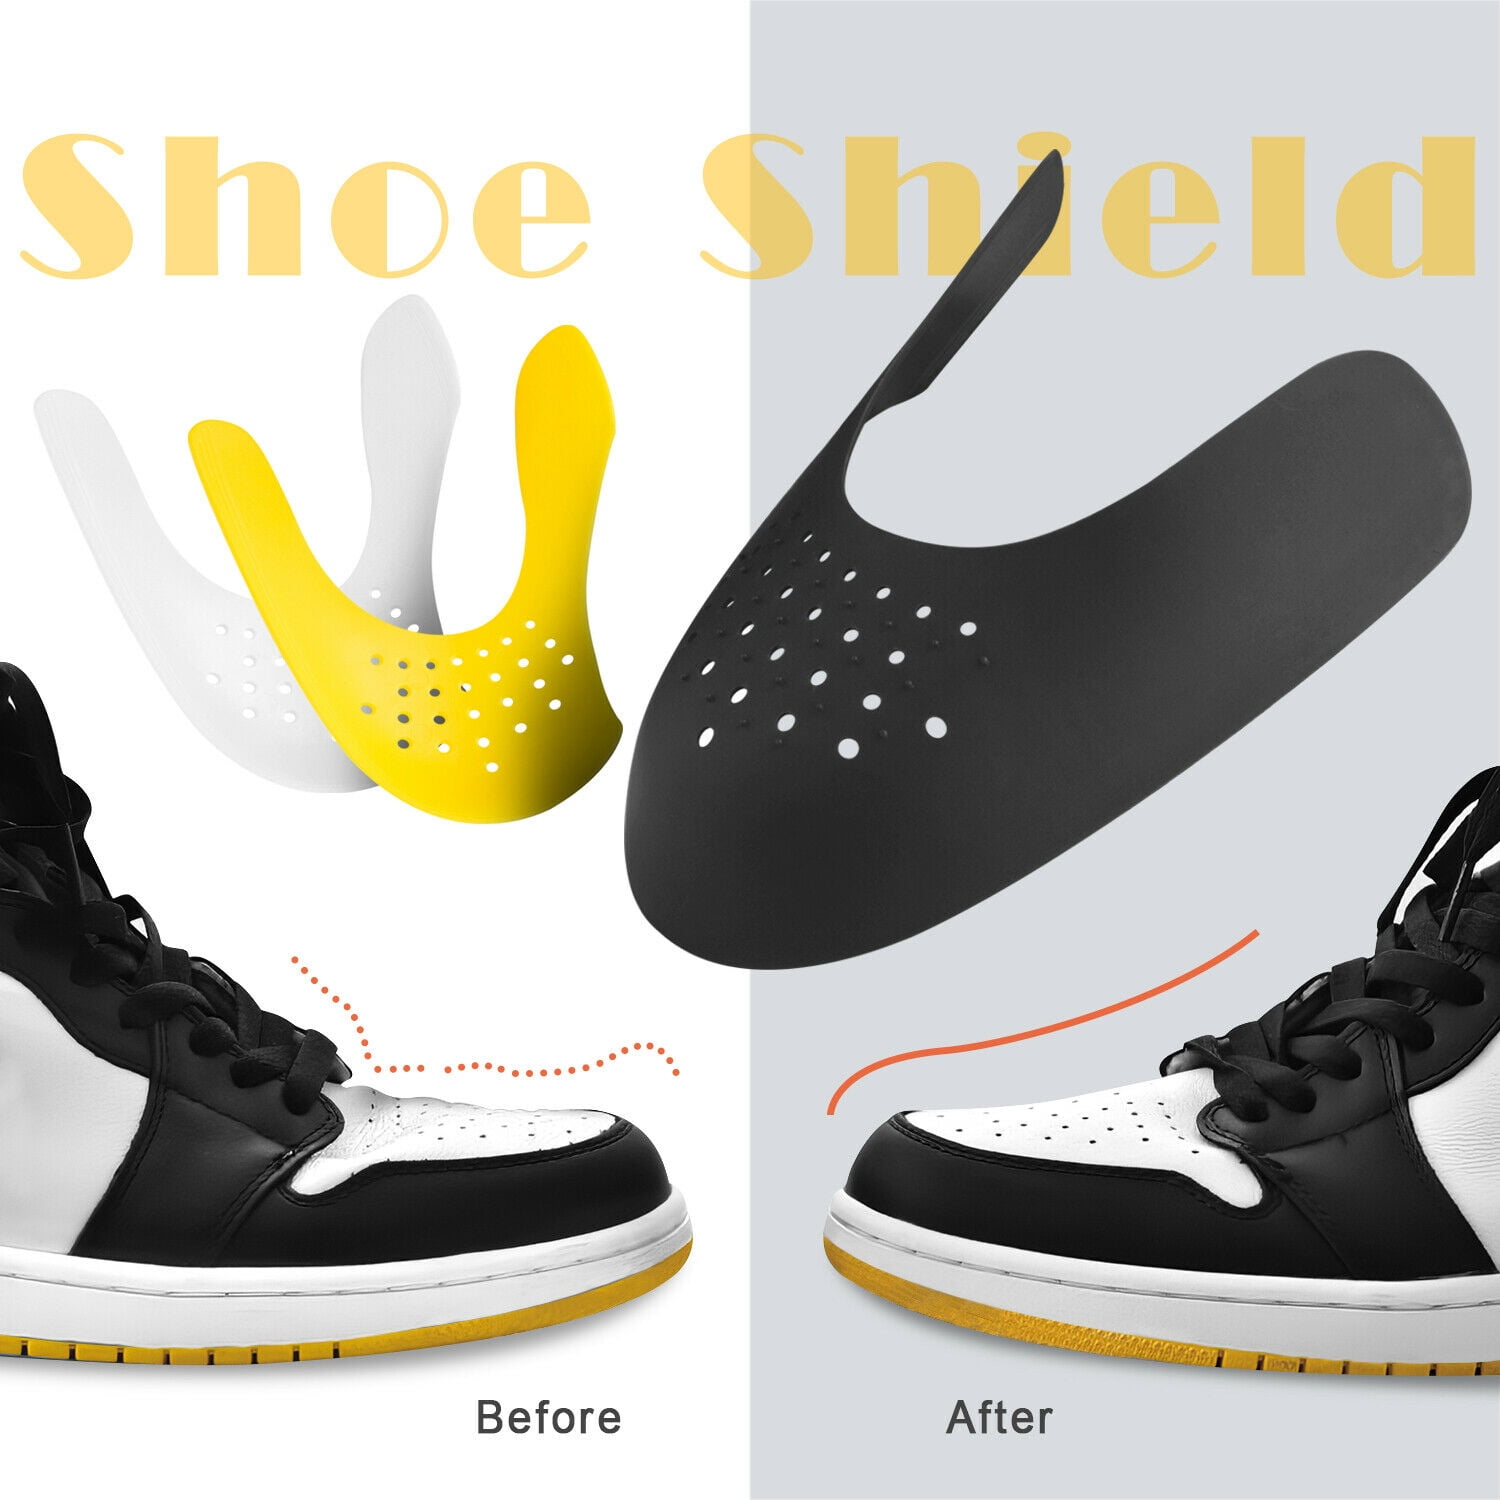 anti crease shoe shield